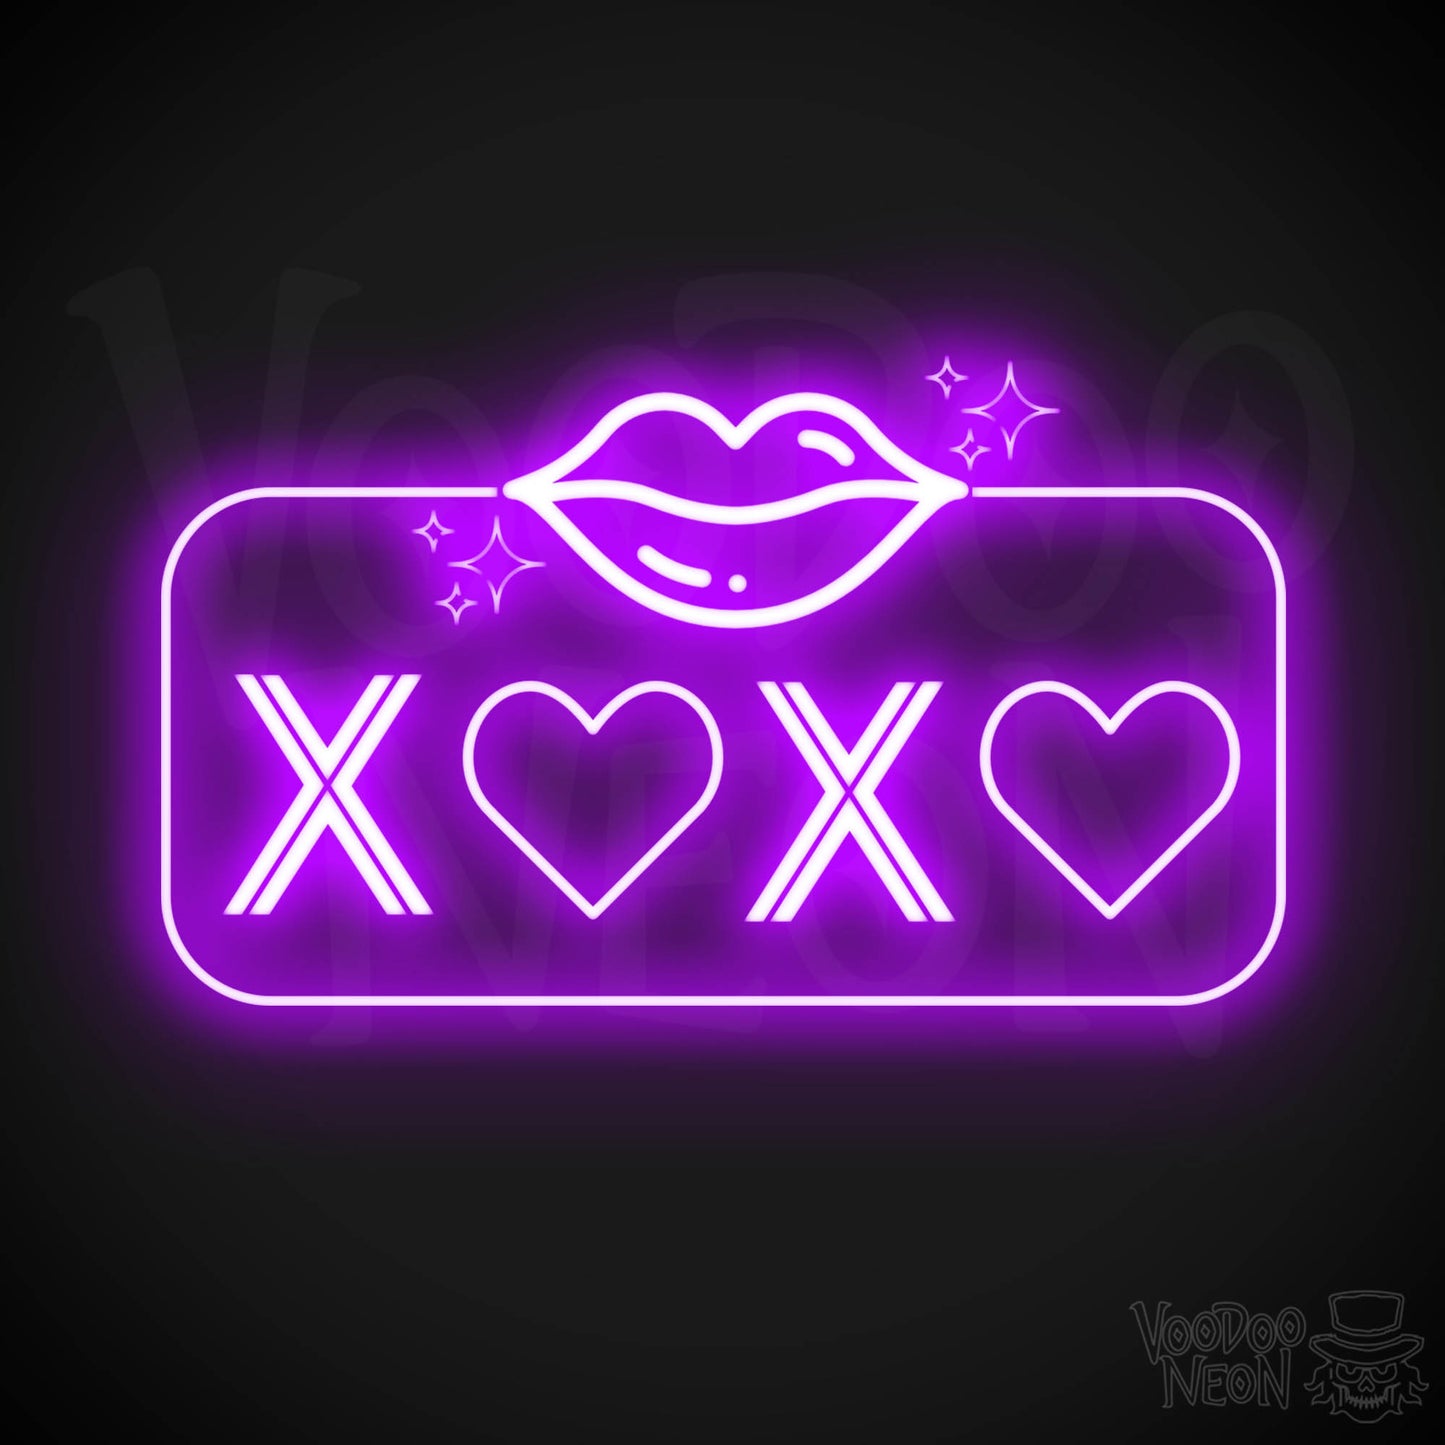 Xoxo Neon Sign - Neon XOXO - Kiss Hug Neon Wall Art - Color Purple